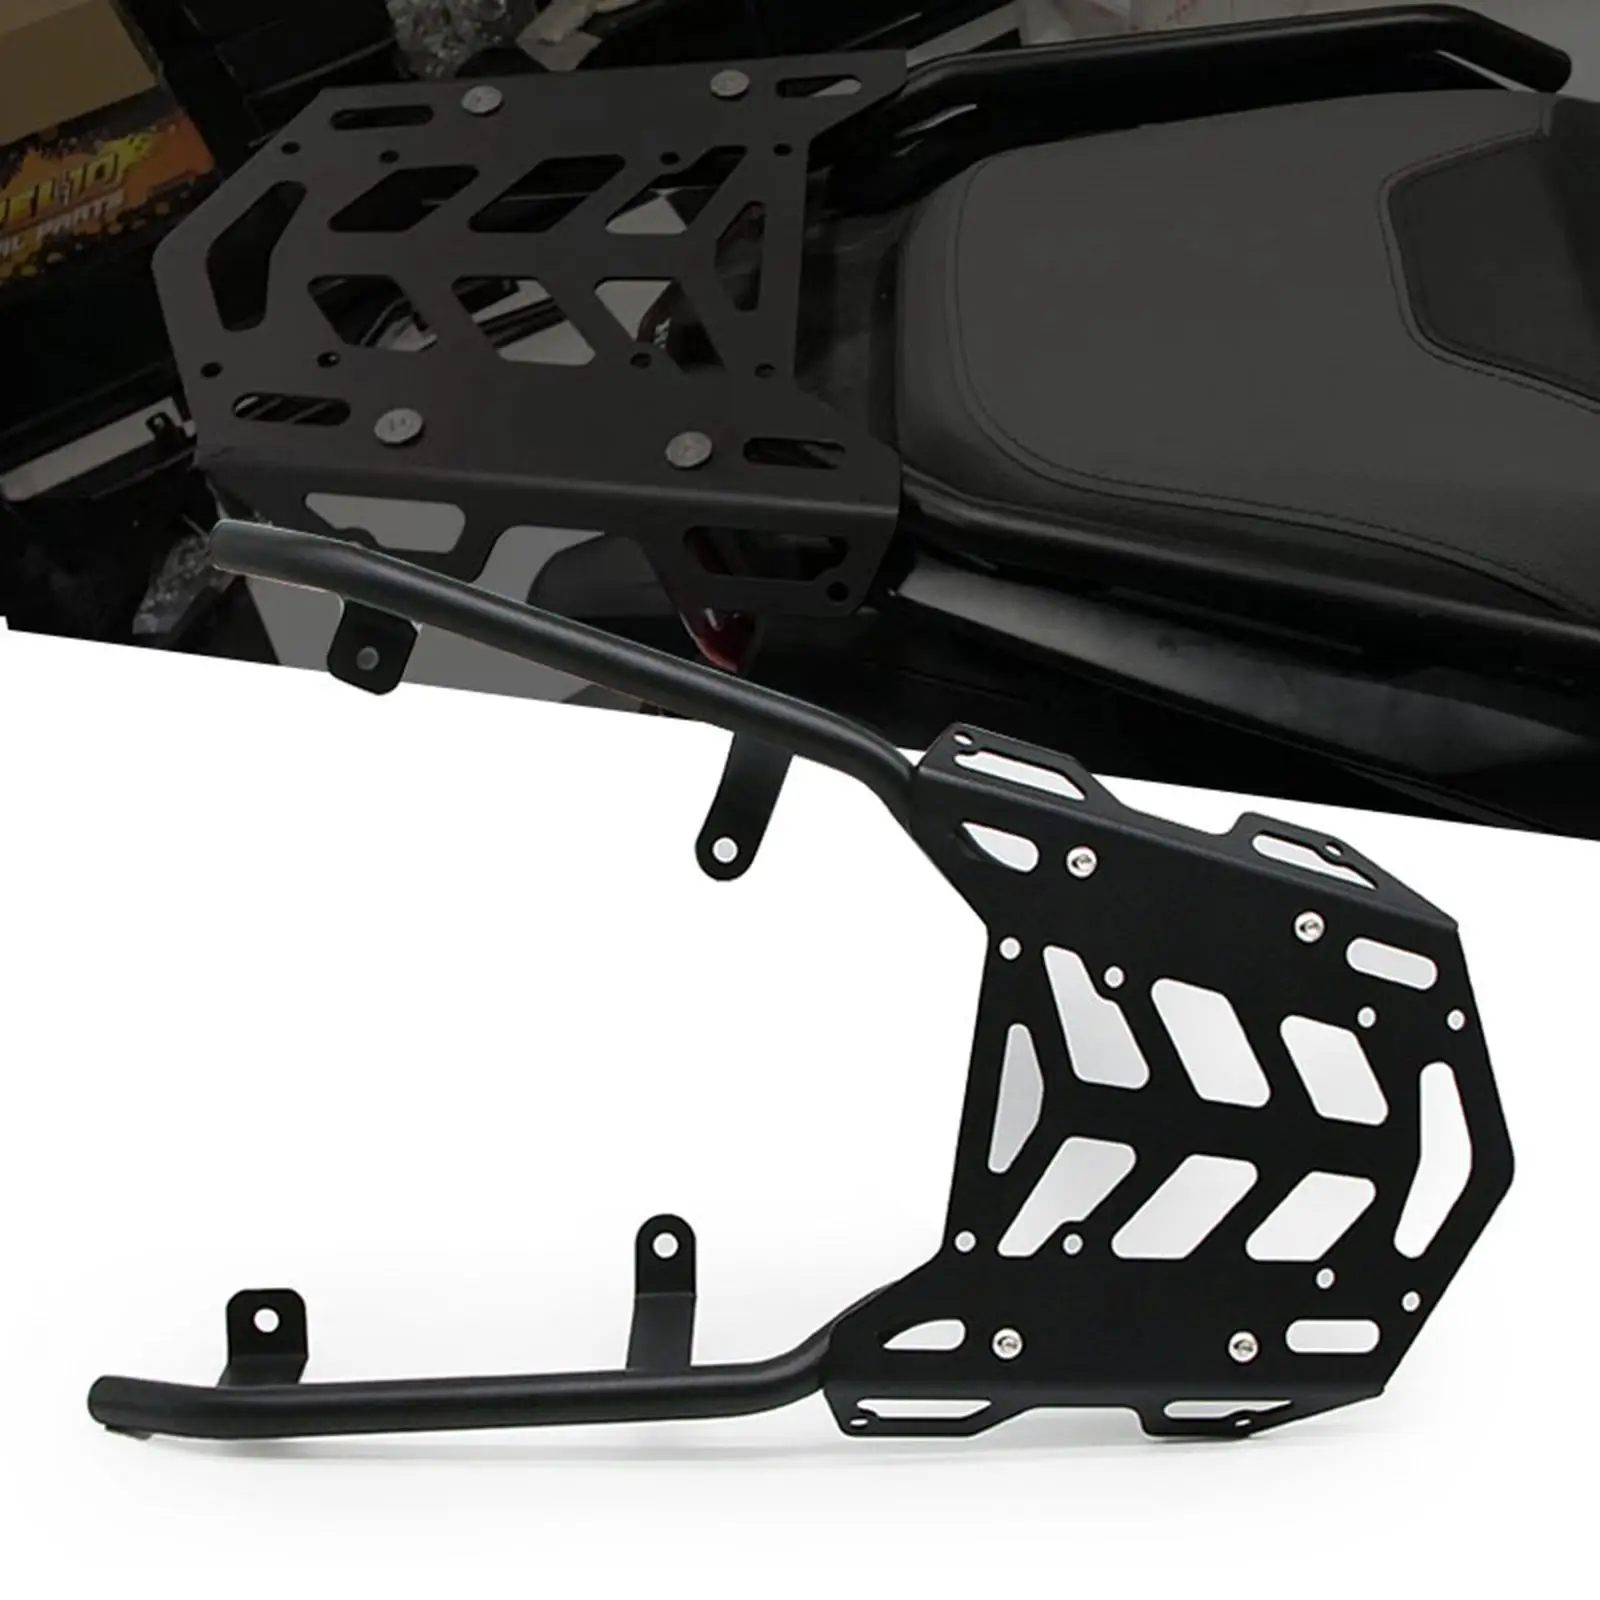 Motorcycle Rear Top Box Base Bracket Support Carrier Shelf Cargo Frame for Honda Adv 150 19-21